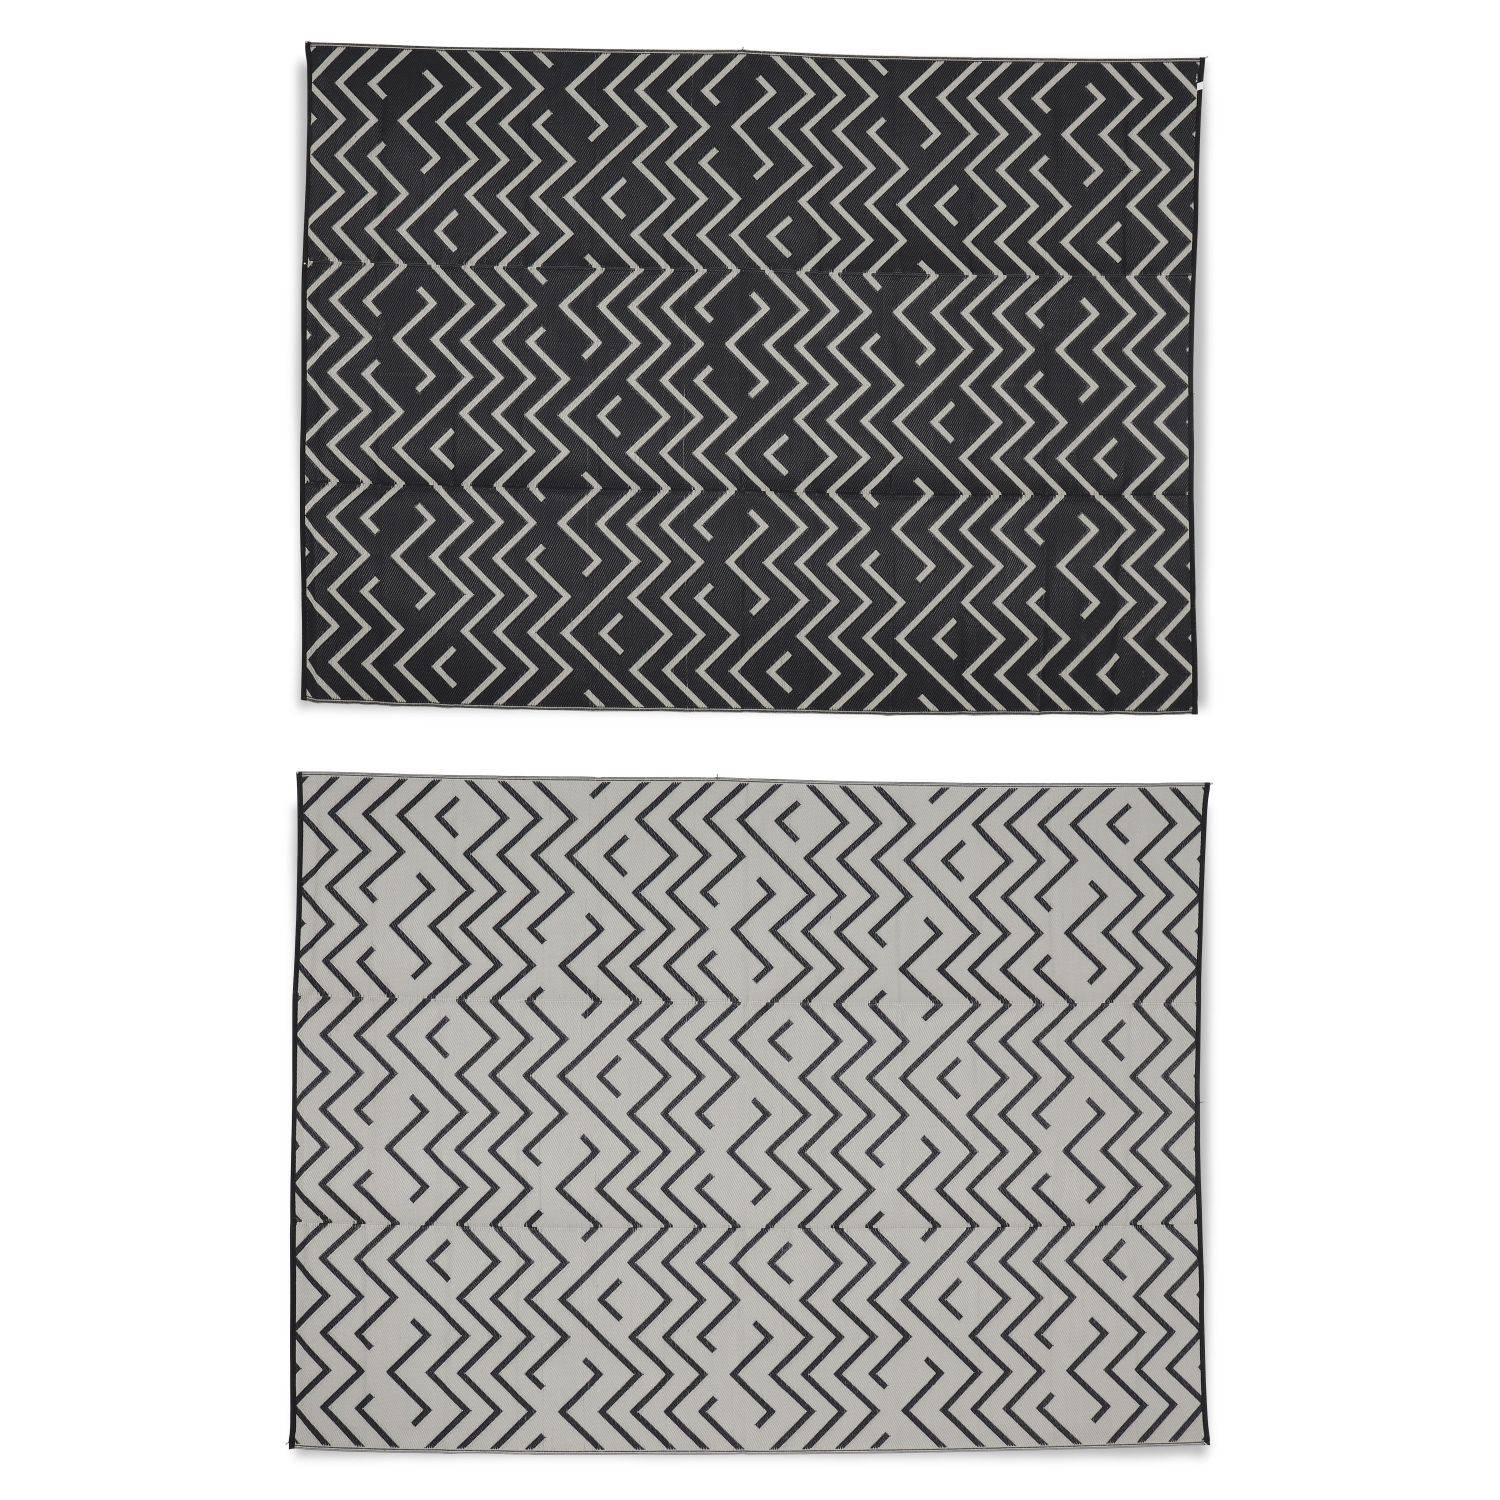 Alfombra de exterior 270x360cm SYDNEY - Rectangular, patrón de ondas negro / beige, jacquard, reversible, interior / exterior,sweeek,Photo2